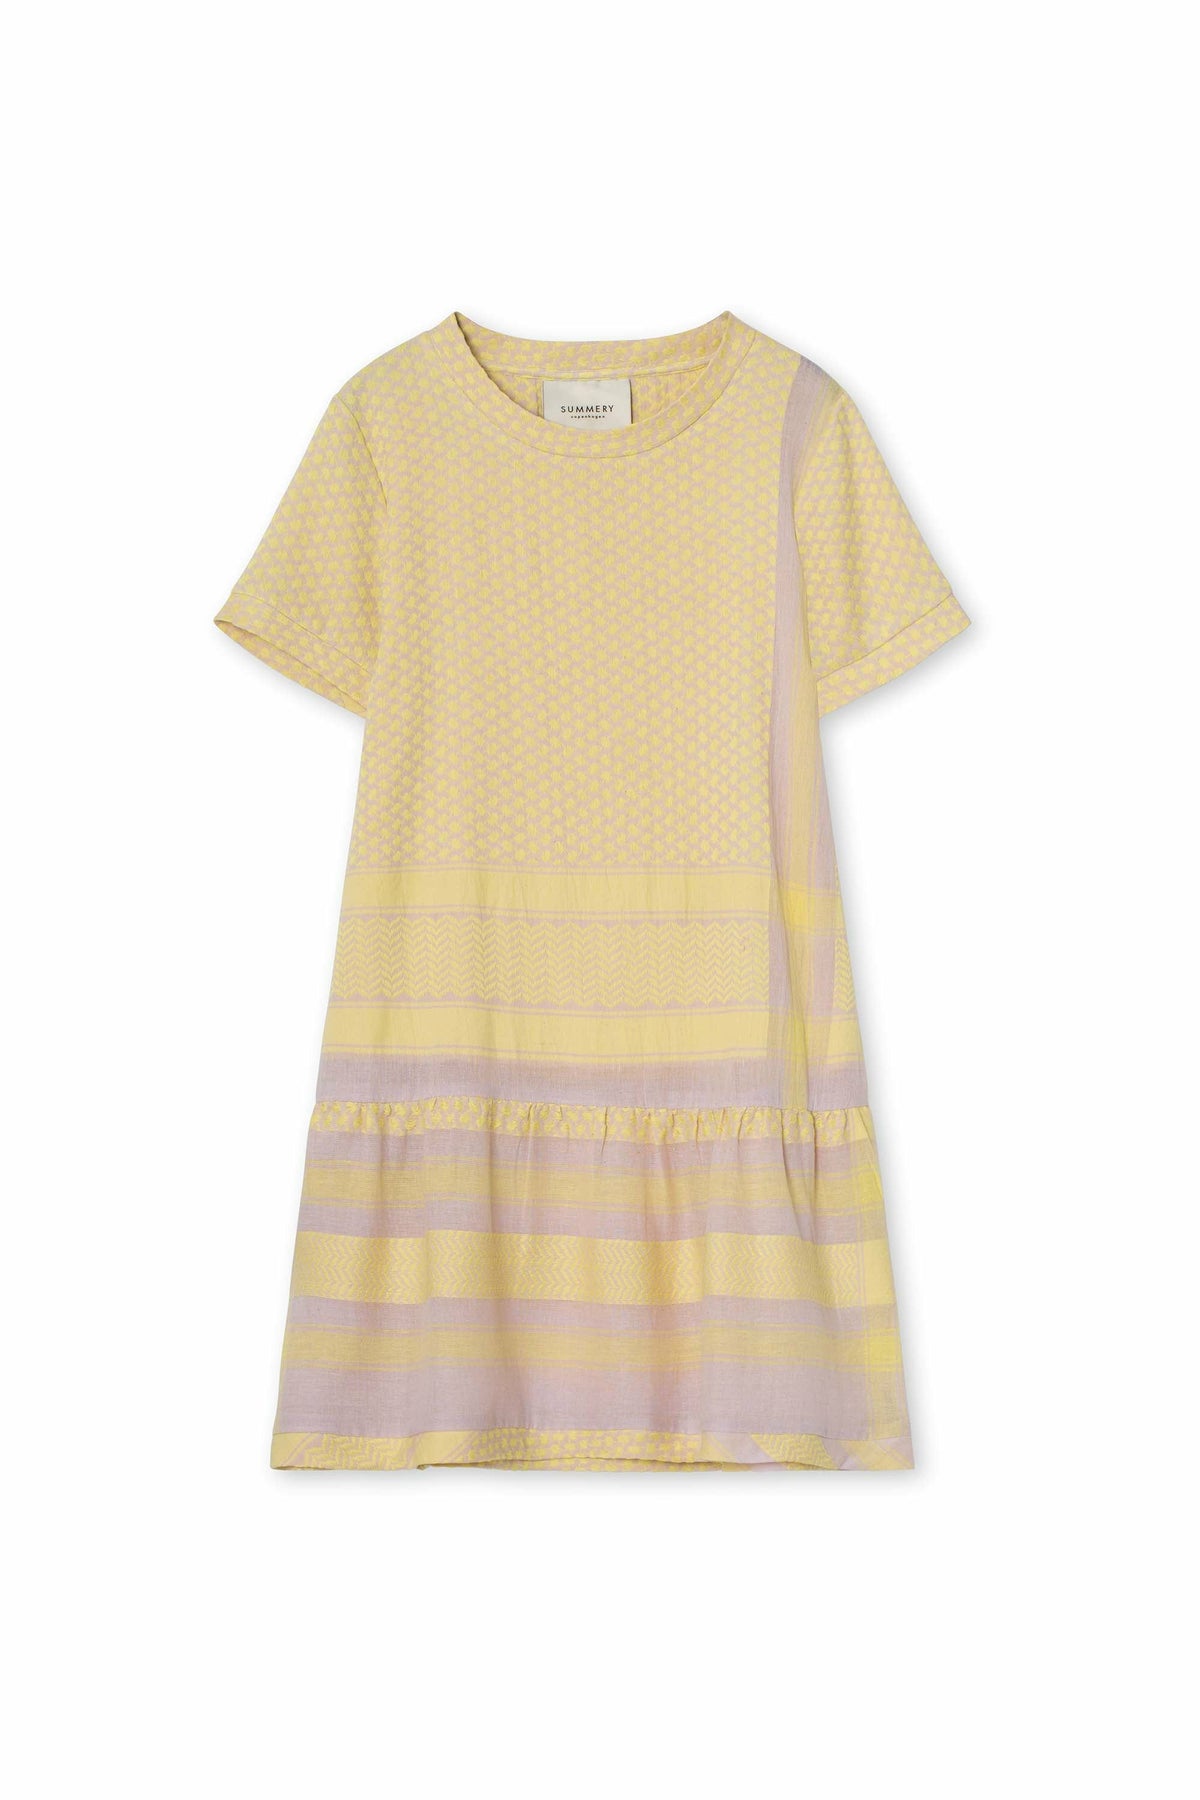 Summery Copenhagen Dress 2 O Short Sleeve - Lavender Fog/Lemonade - Escape